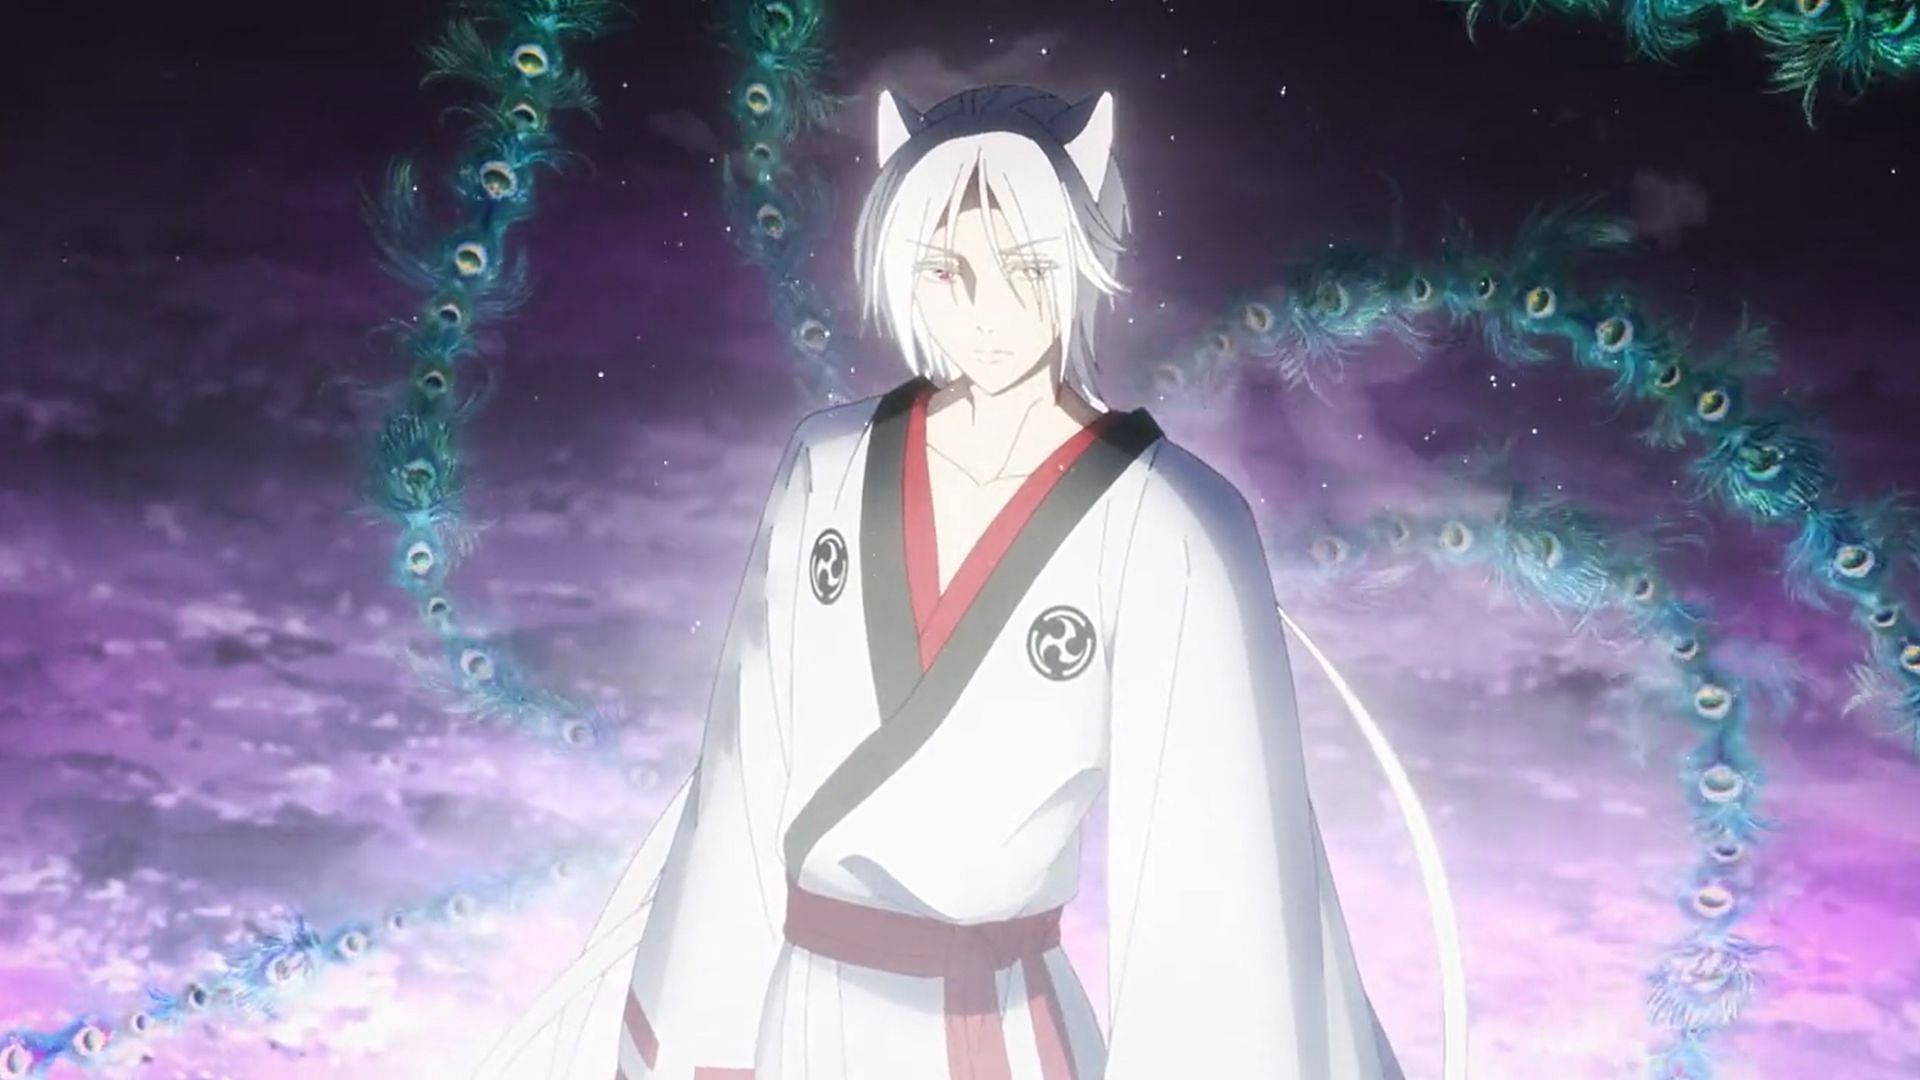 The Demon Prince of Momochi House Anime Announced : r/anime